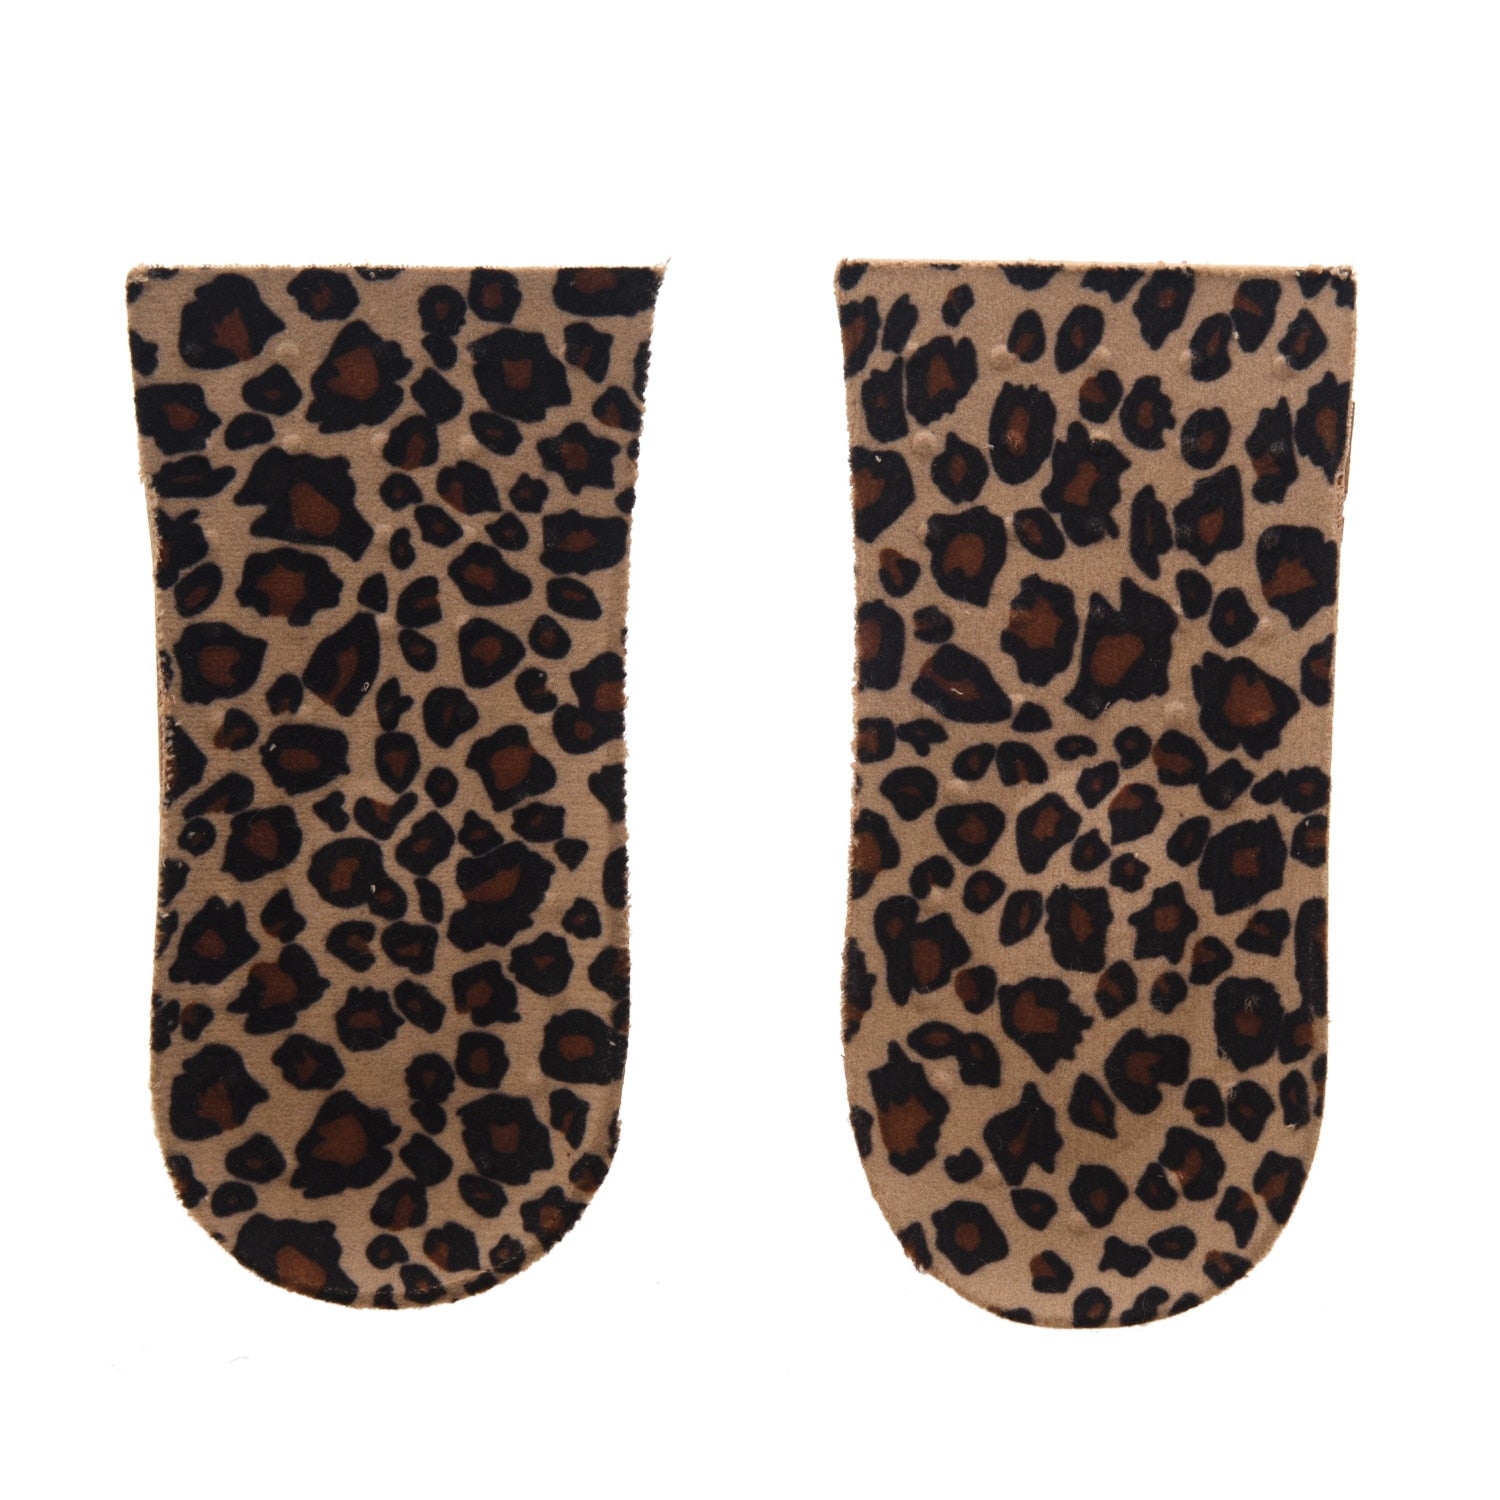 Hot 4 x Sole Heel Pad PVC Leopard Growing for Women Men + 4.5cm - ebowsos